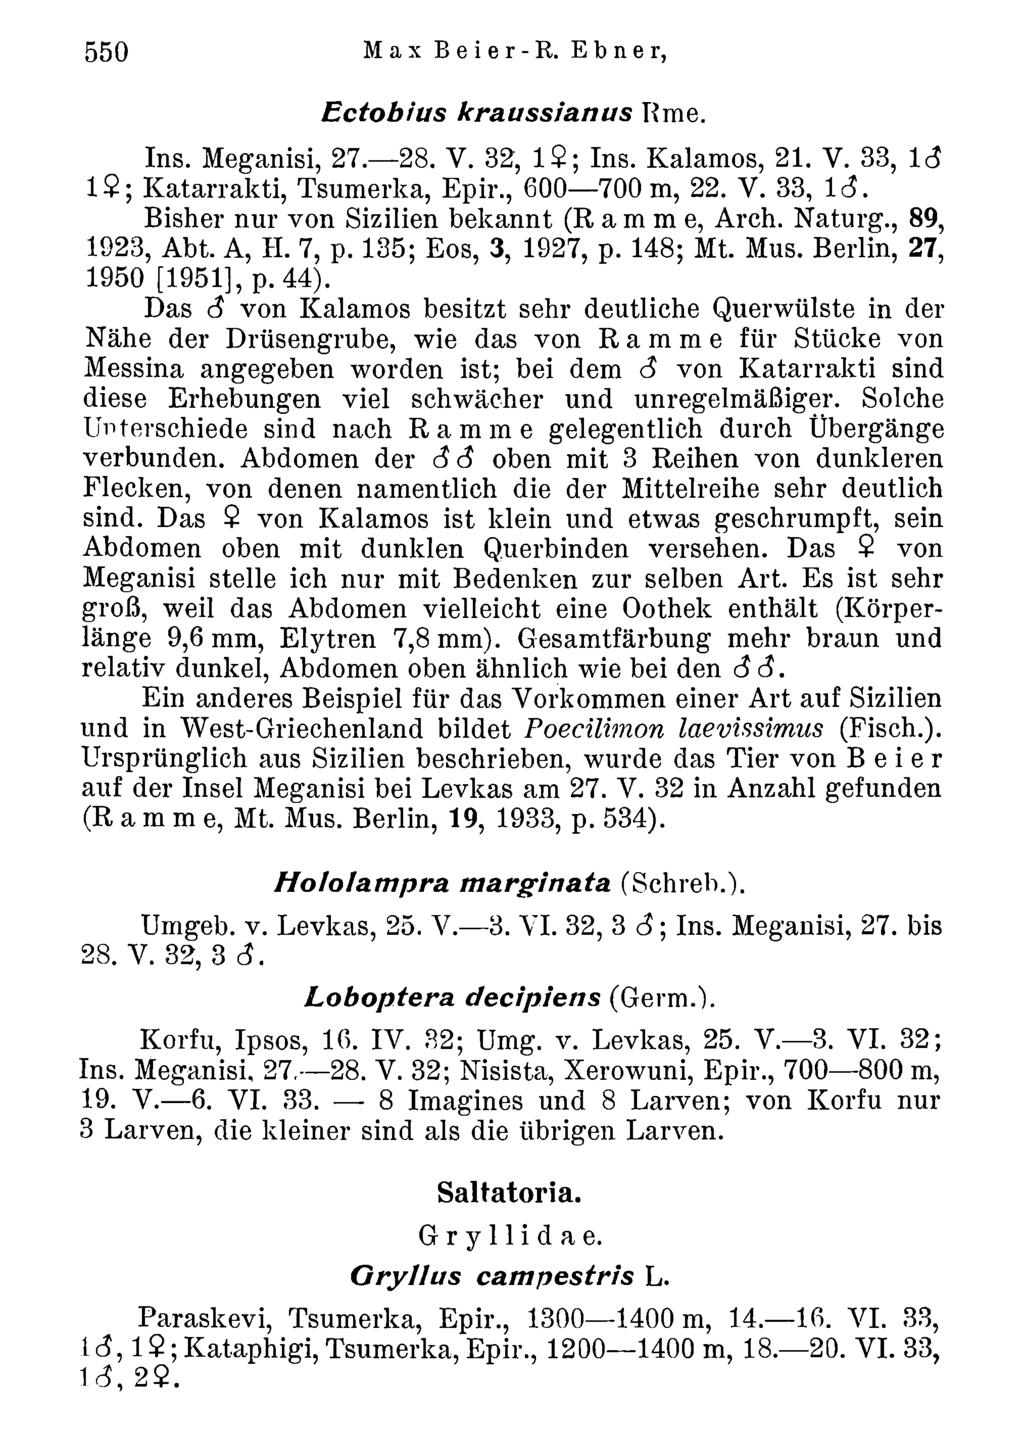 550 Max Beier -R. Ebner, Akademie d. Wissenschaften Wien; download unter www.biologiezentrum.at Ectobius kra.ussia.nus Rme. Ins. Meganisi, 2 7.-2 8. Y. 32, 1 $ ; Ins. Kalamos, 21. Y. 33, 16 1 $ ; Katarrakti, Tsumerka, Epir.